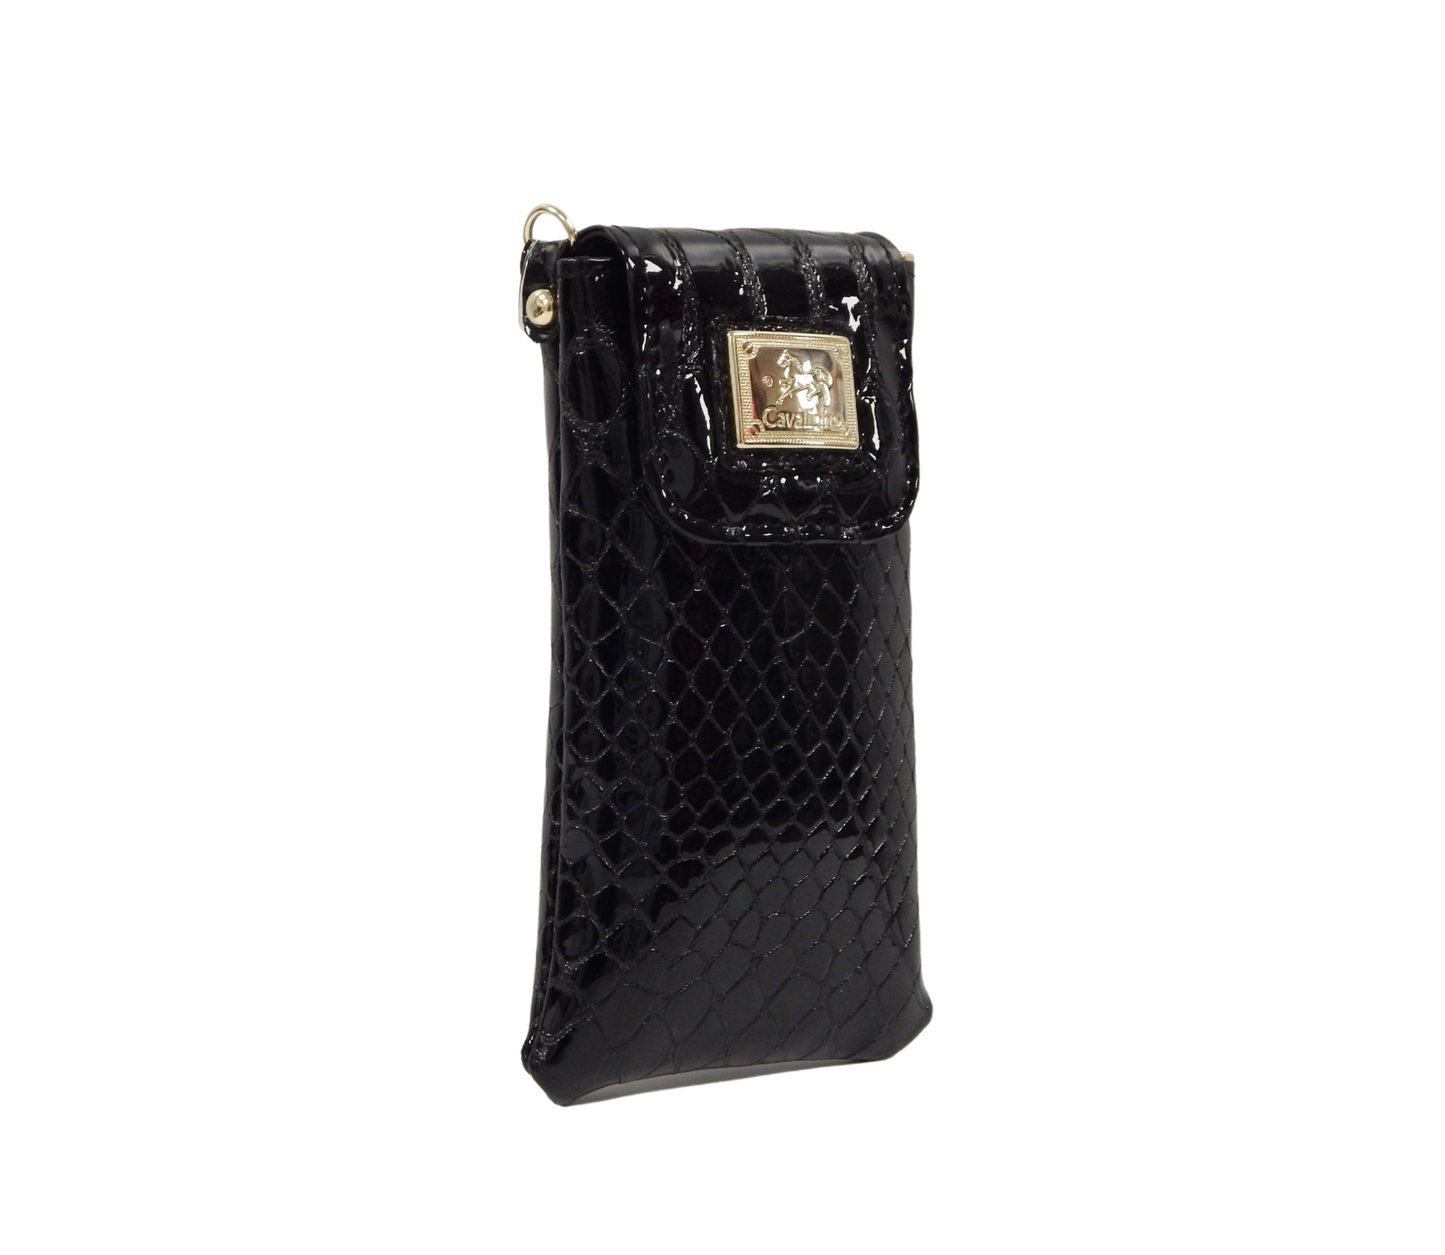 Cavalinho Galope Patent Leather Phone Purse - Black - 28170267.01_2